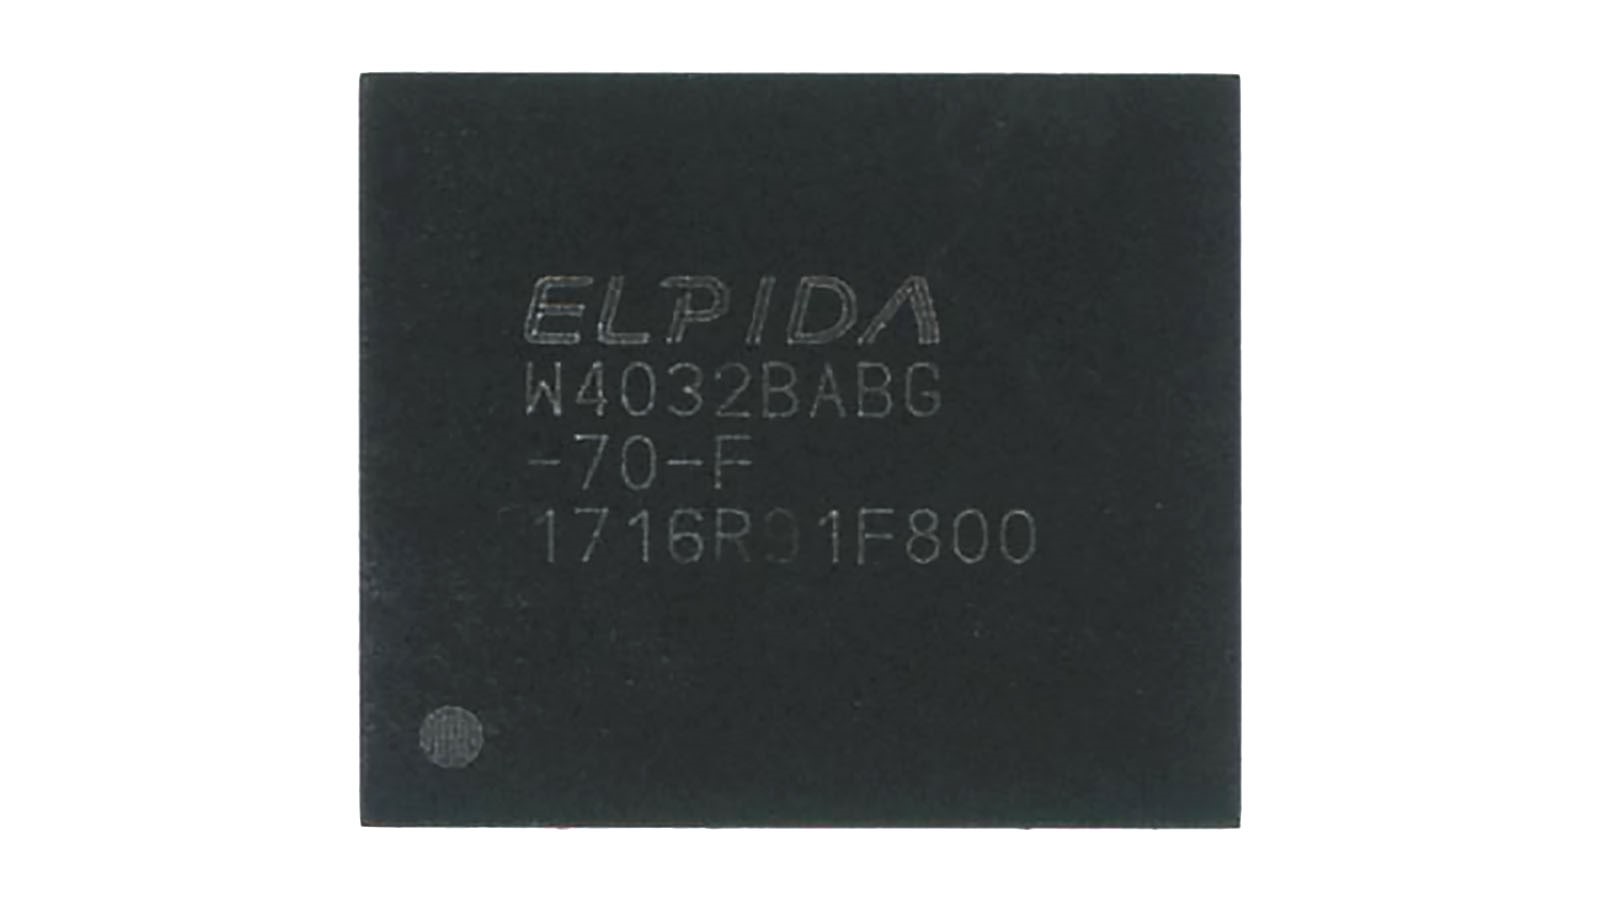 Видеопамять GDDR5 ELPIDA W4032BABG-70-F